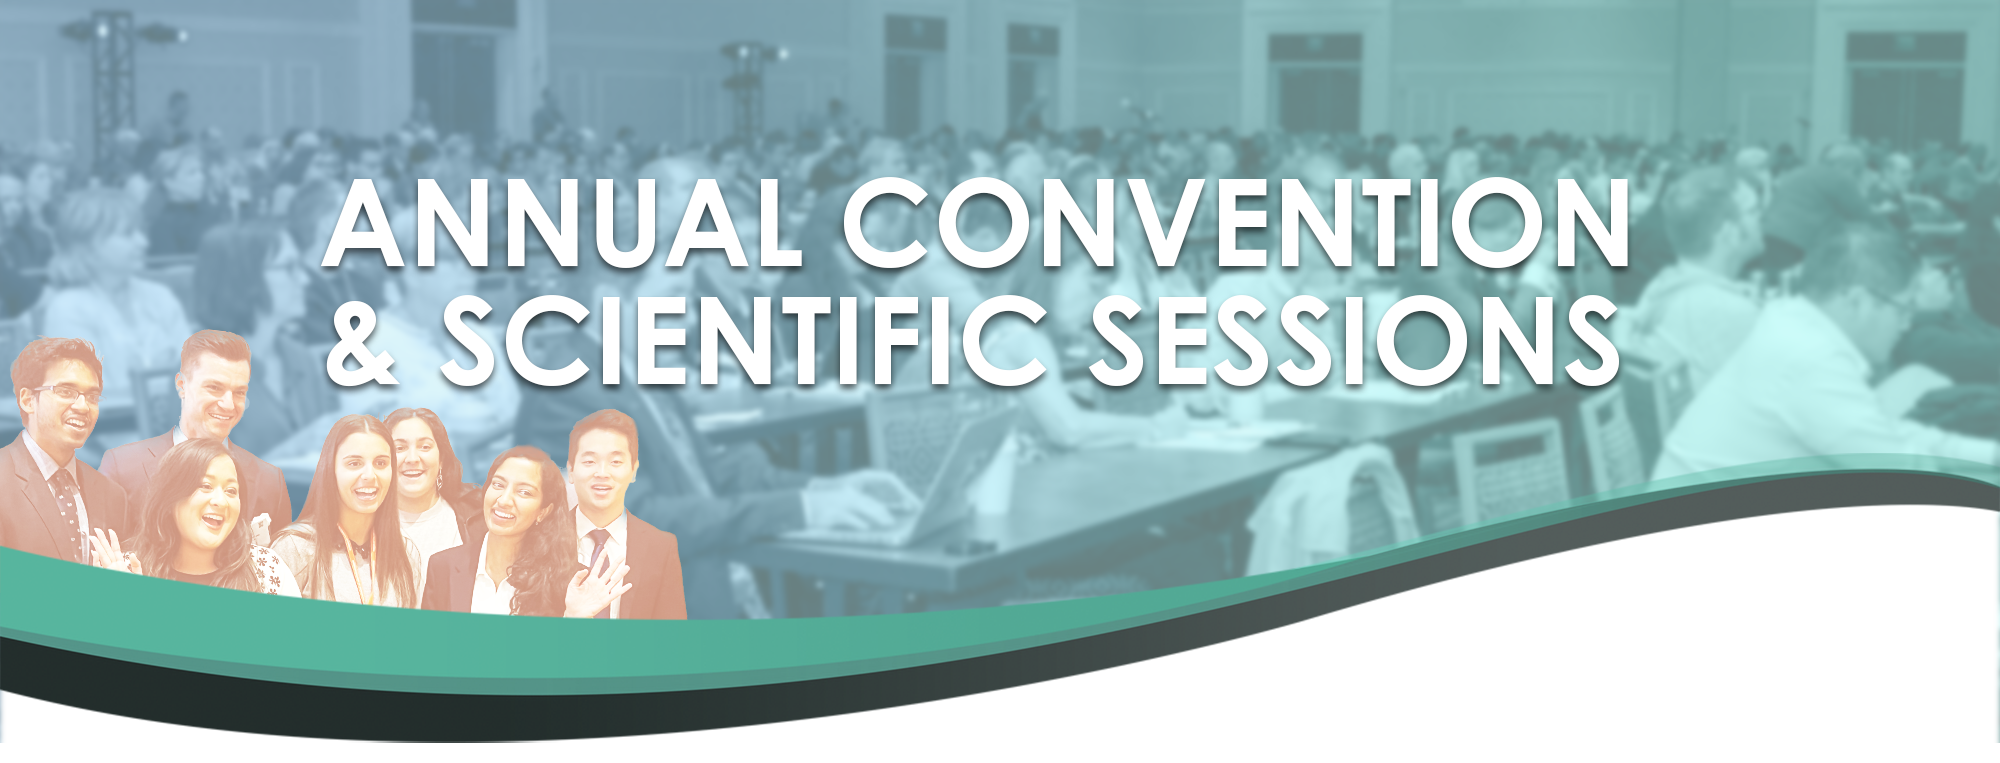 Annual Convention & Scientific Sessions